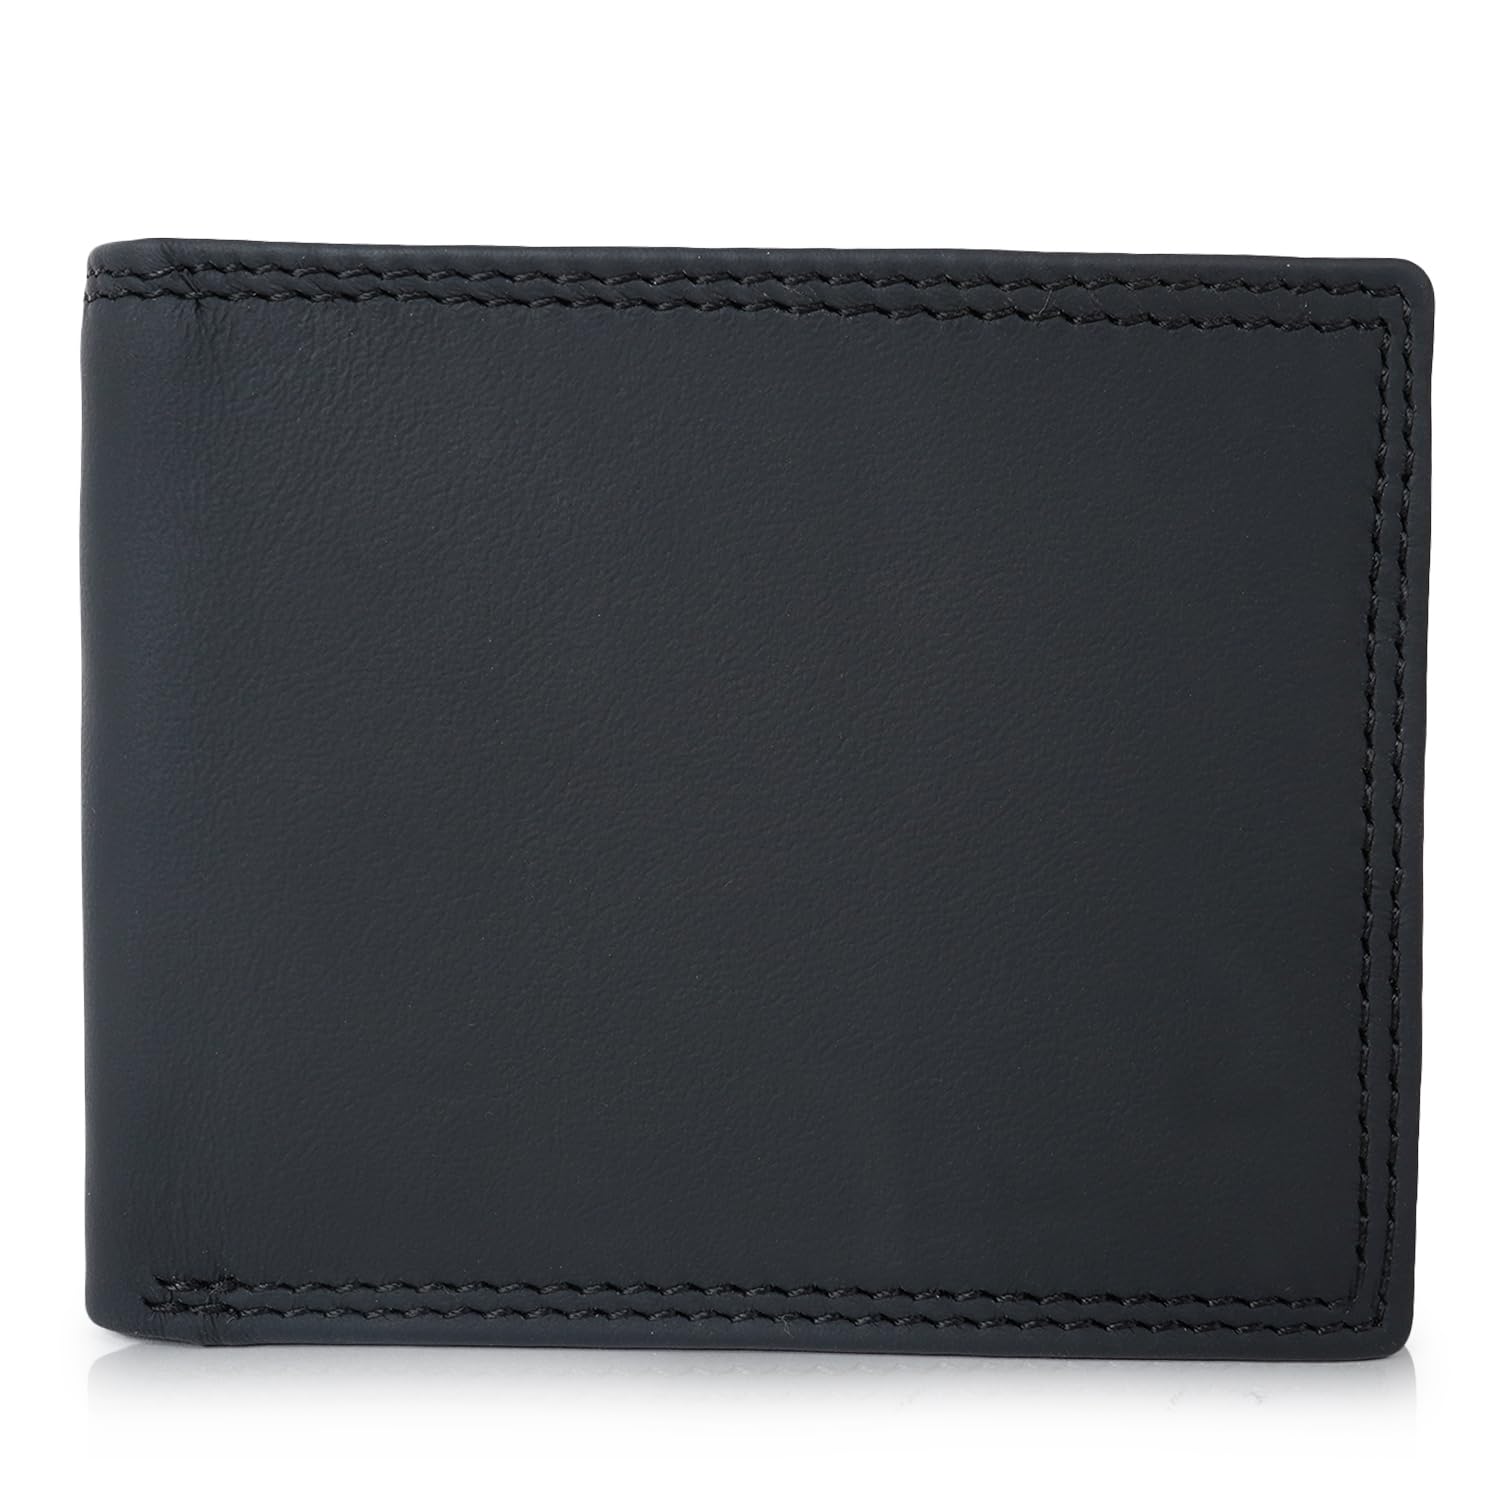 CIMONI Genuine Leather Casual Formal Slim Wallet for Men & Boys